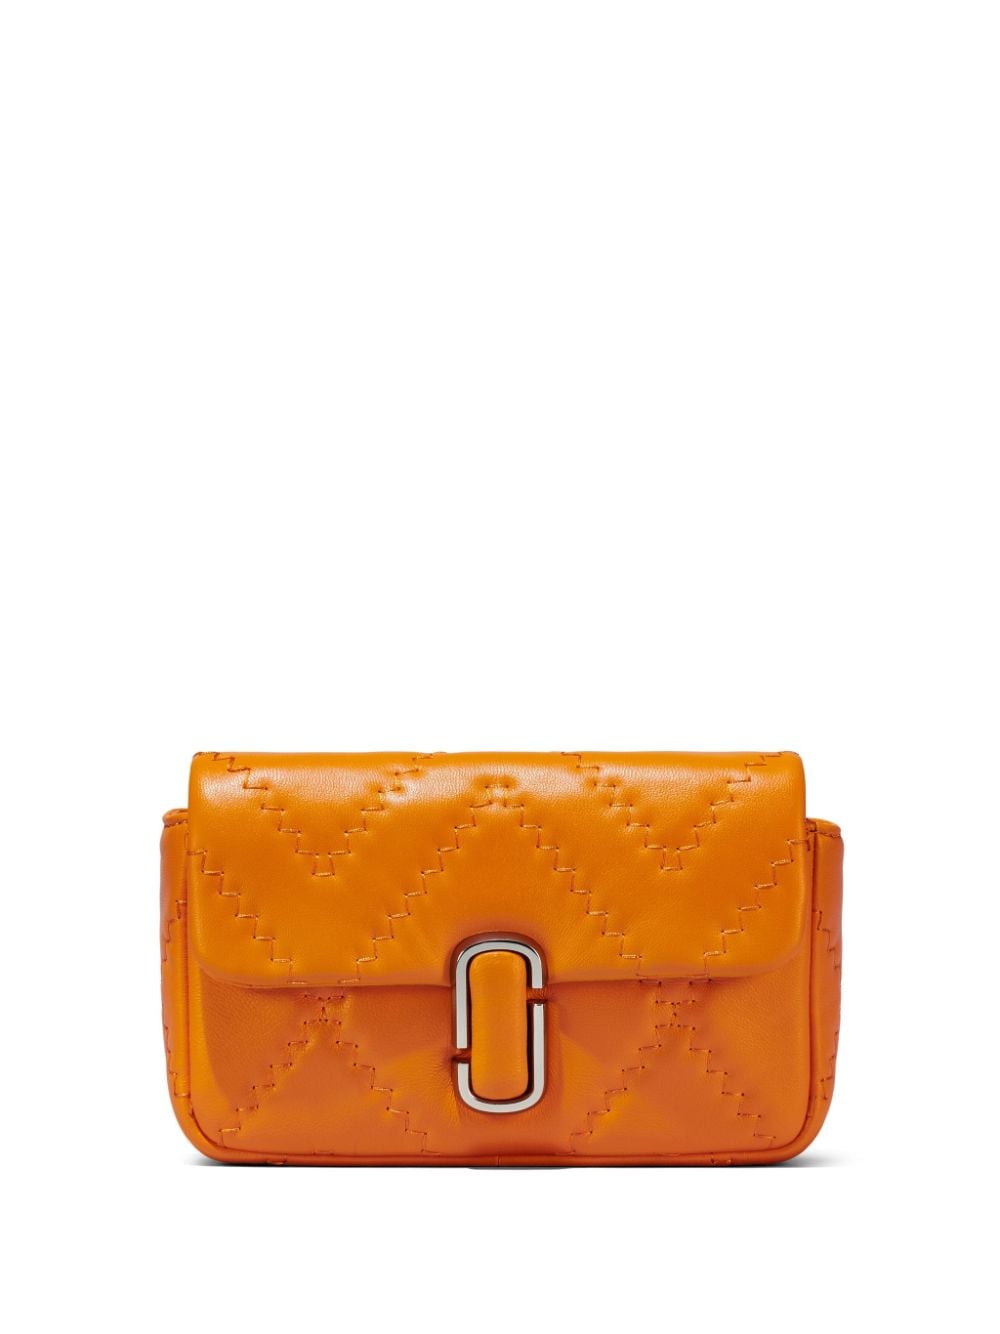 Marc Jacobs The Mini bag - Orange von Marc Jacobs